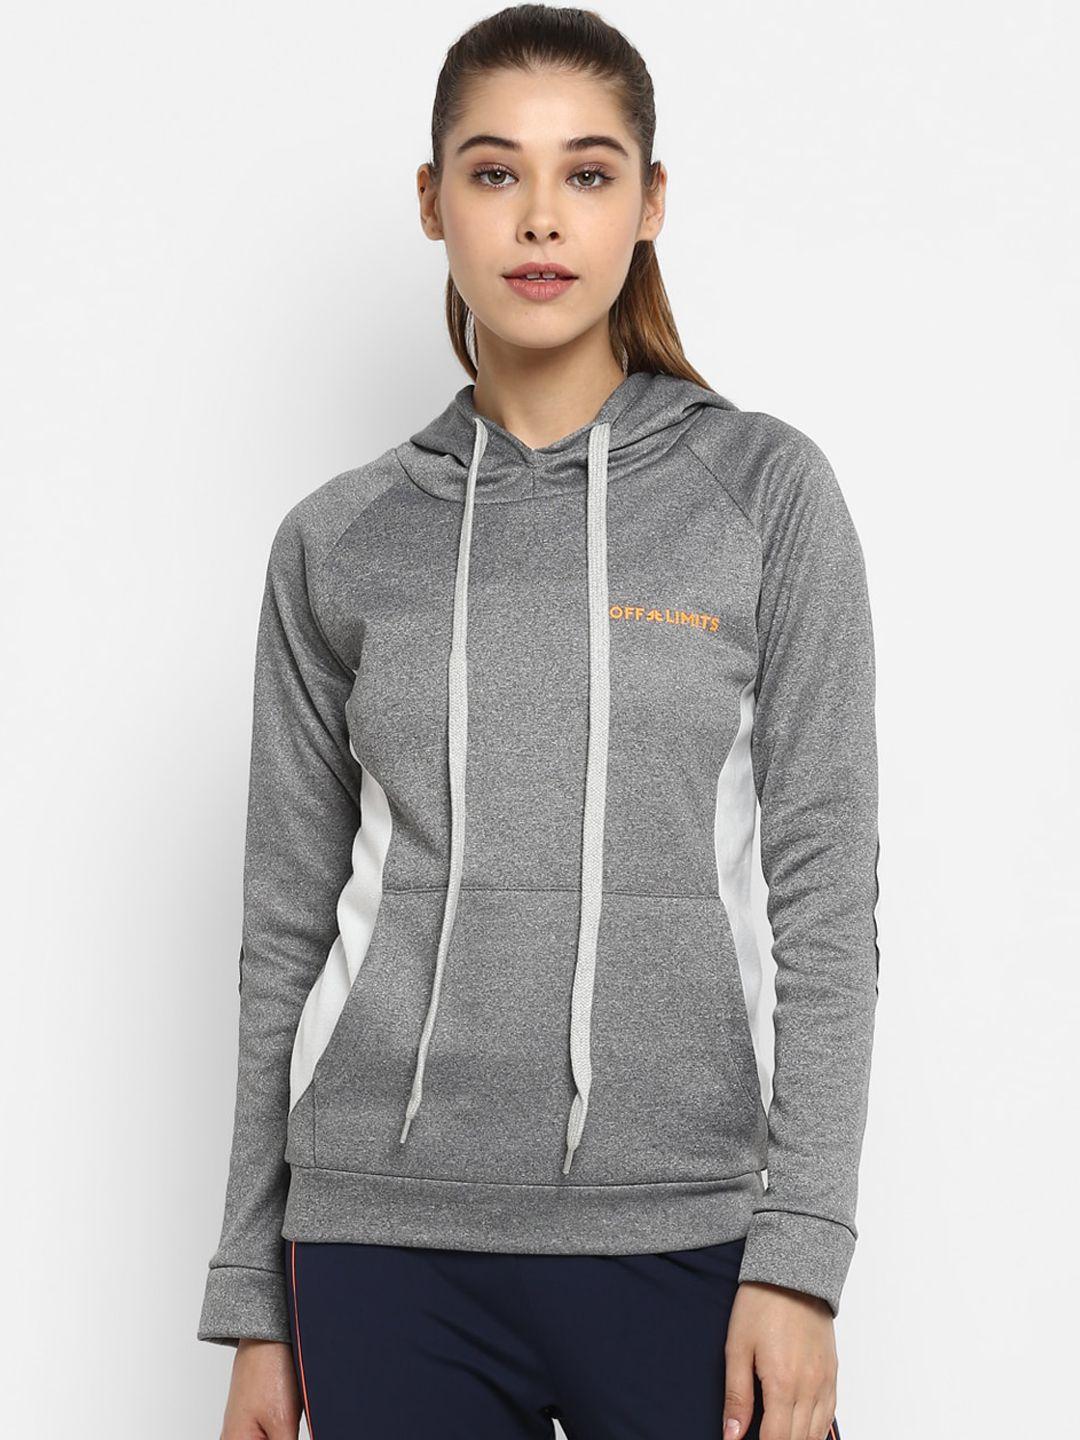 off-limits-women-grey-melange-solid-hooded-sweatshirt